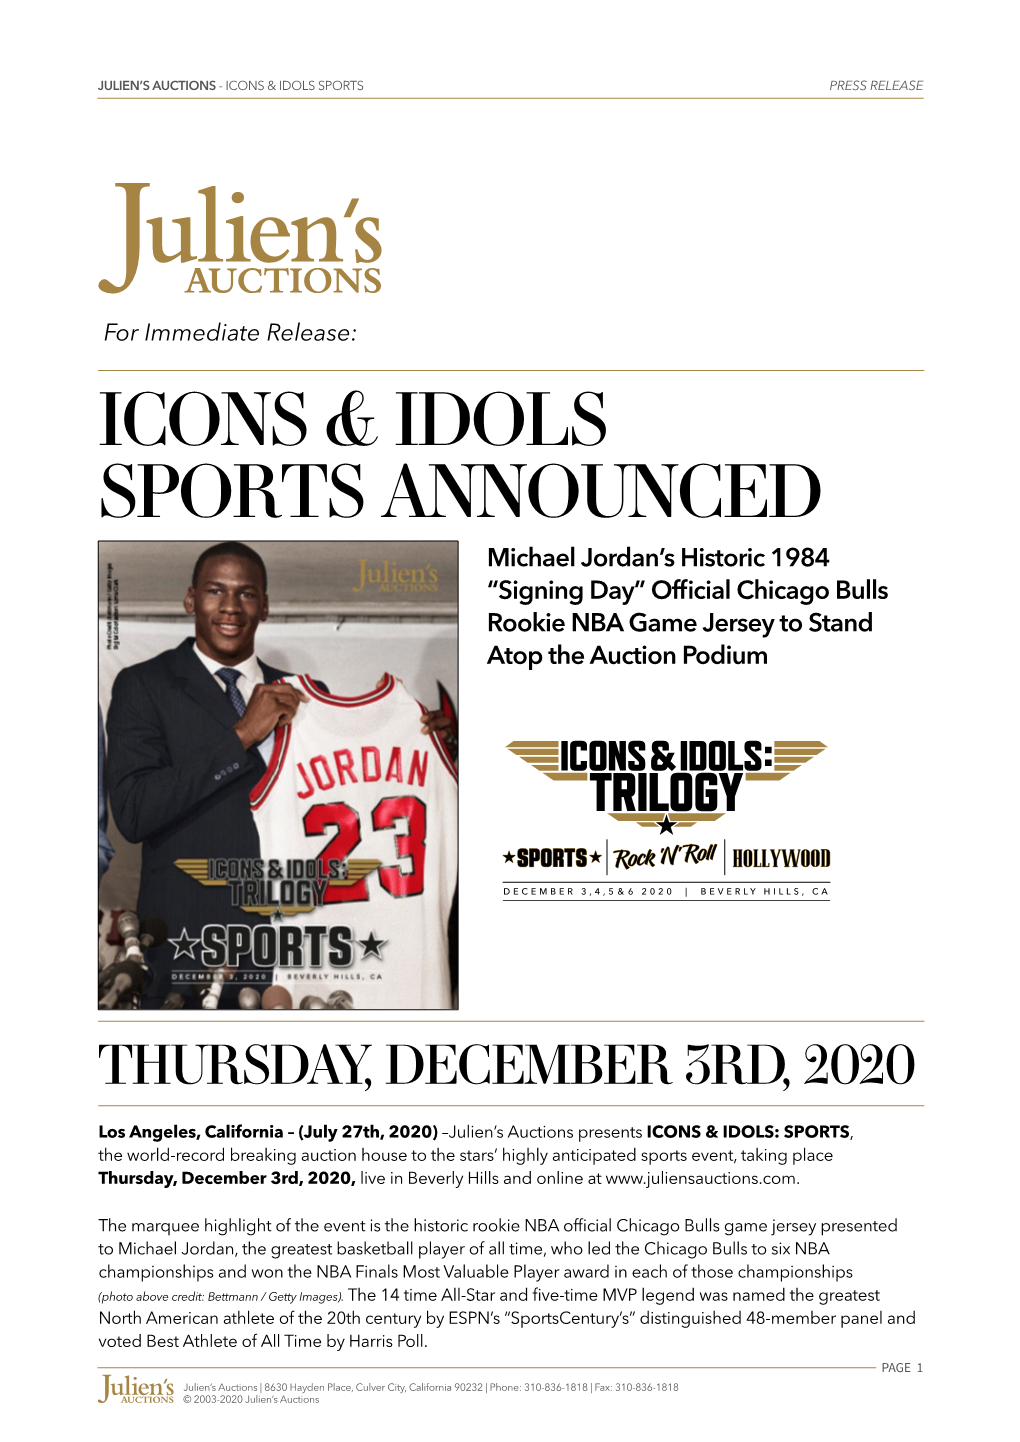 Icons & Idols Sports Announced